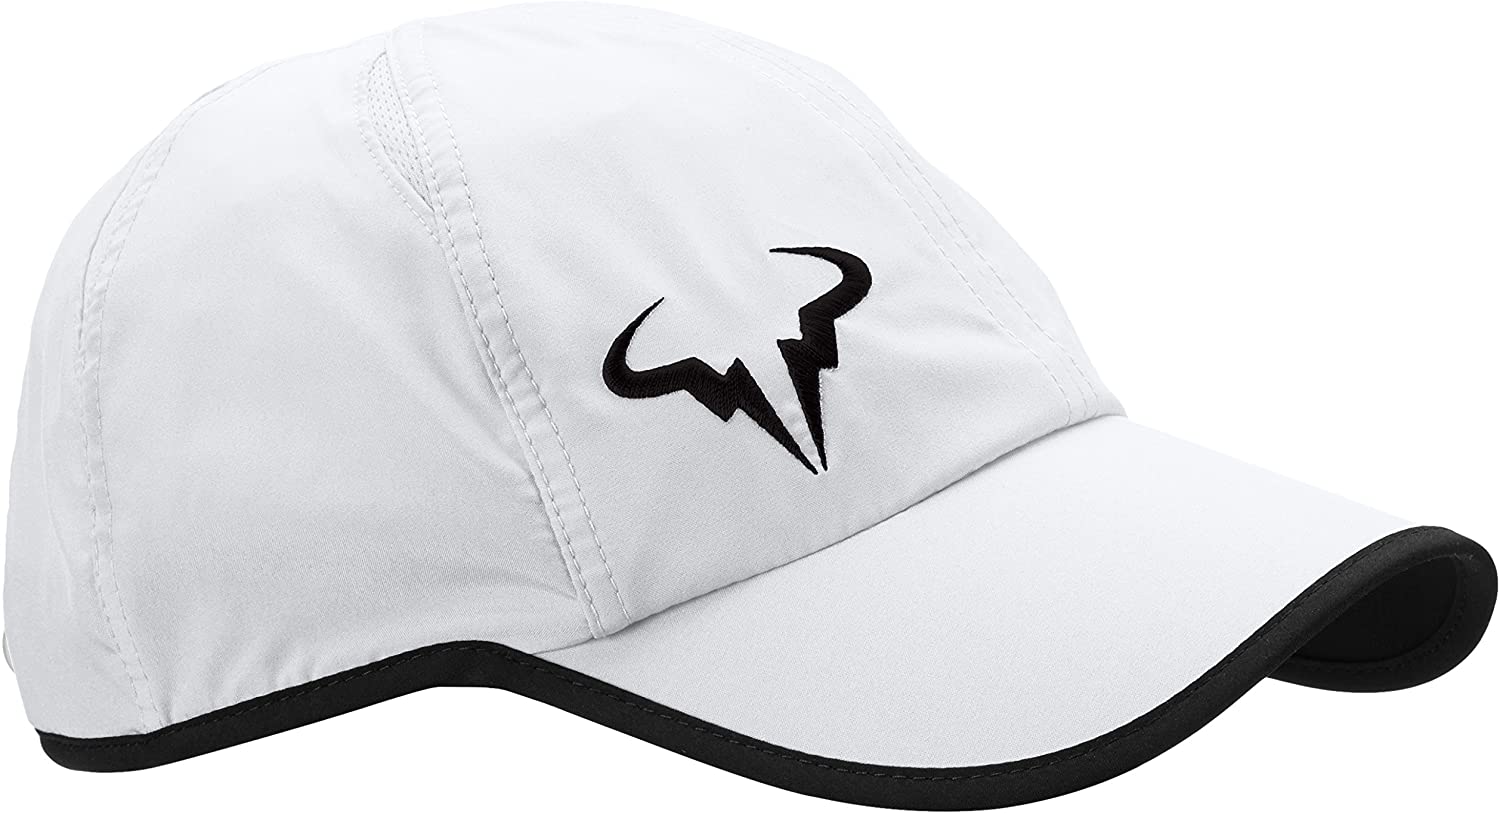 NIKE Adult Rafa Nadal Bull FEATHERLIGHT Tennis Cap/Hat-White/Black 398224-100 VALLEYSPORTING